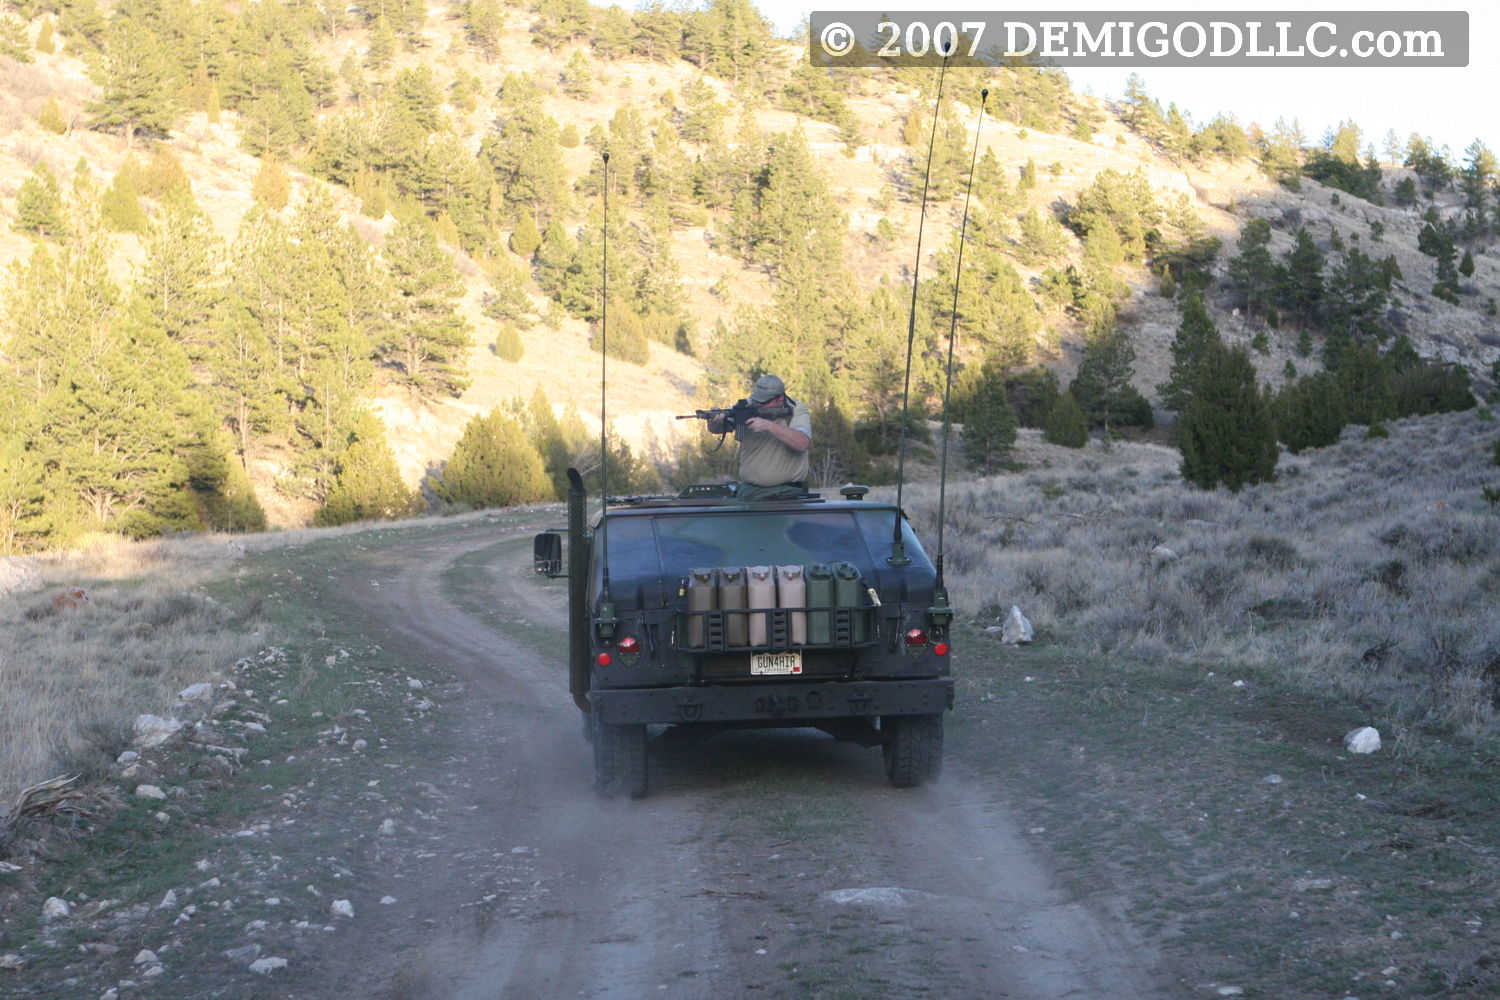 Colorado Multi-Gun match at Camp Guernsery ARNG Base 4/2007
, photo 